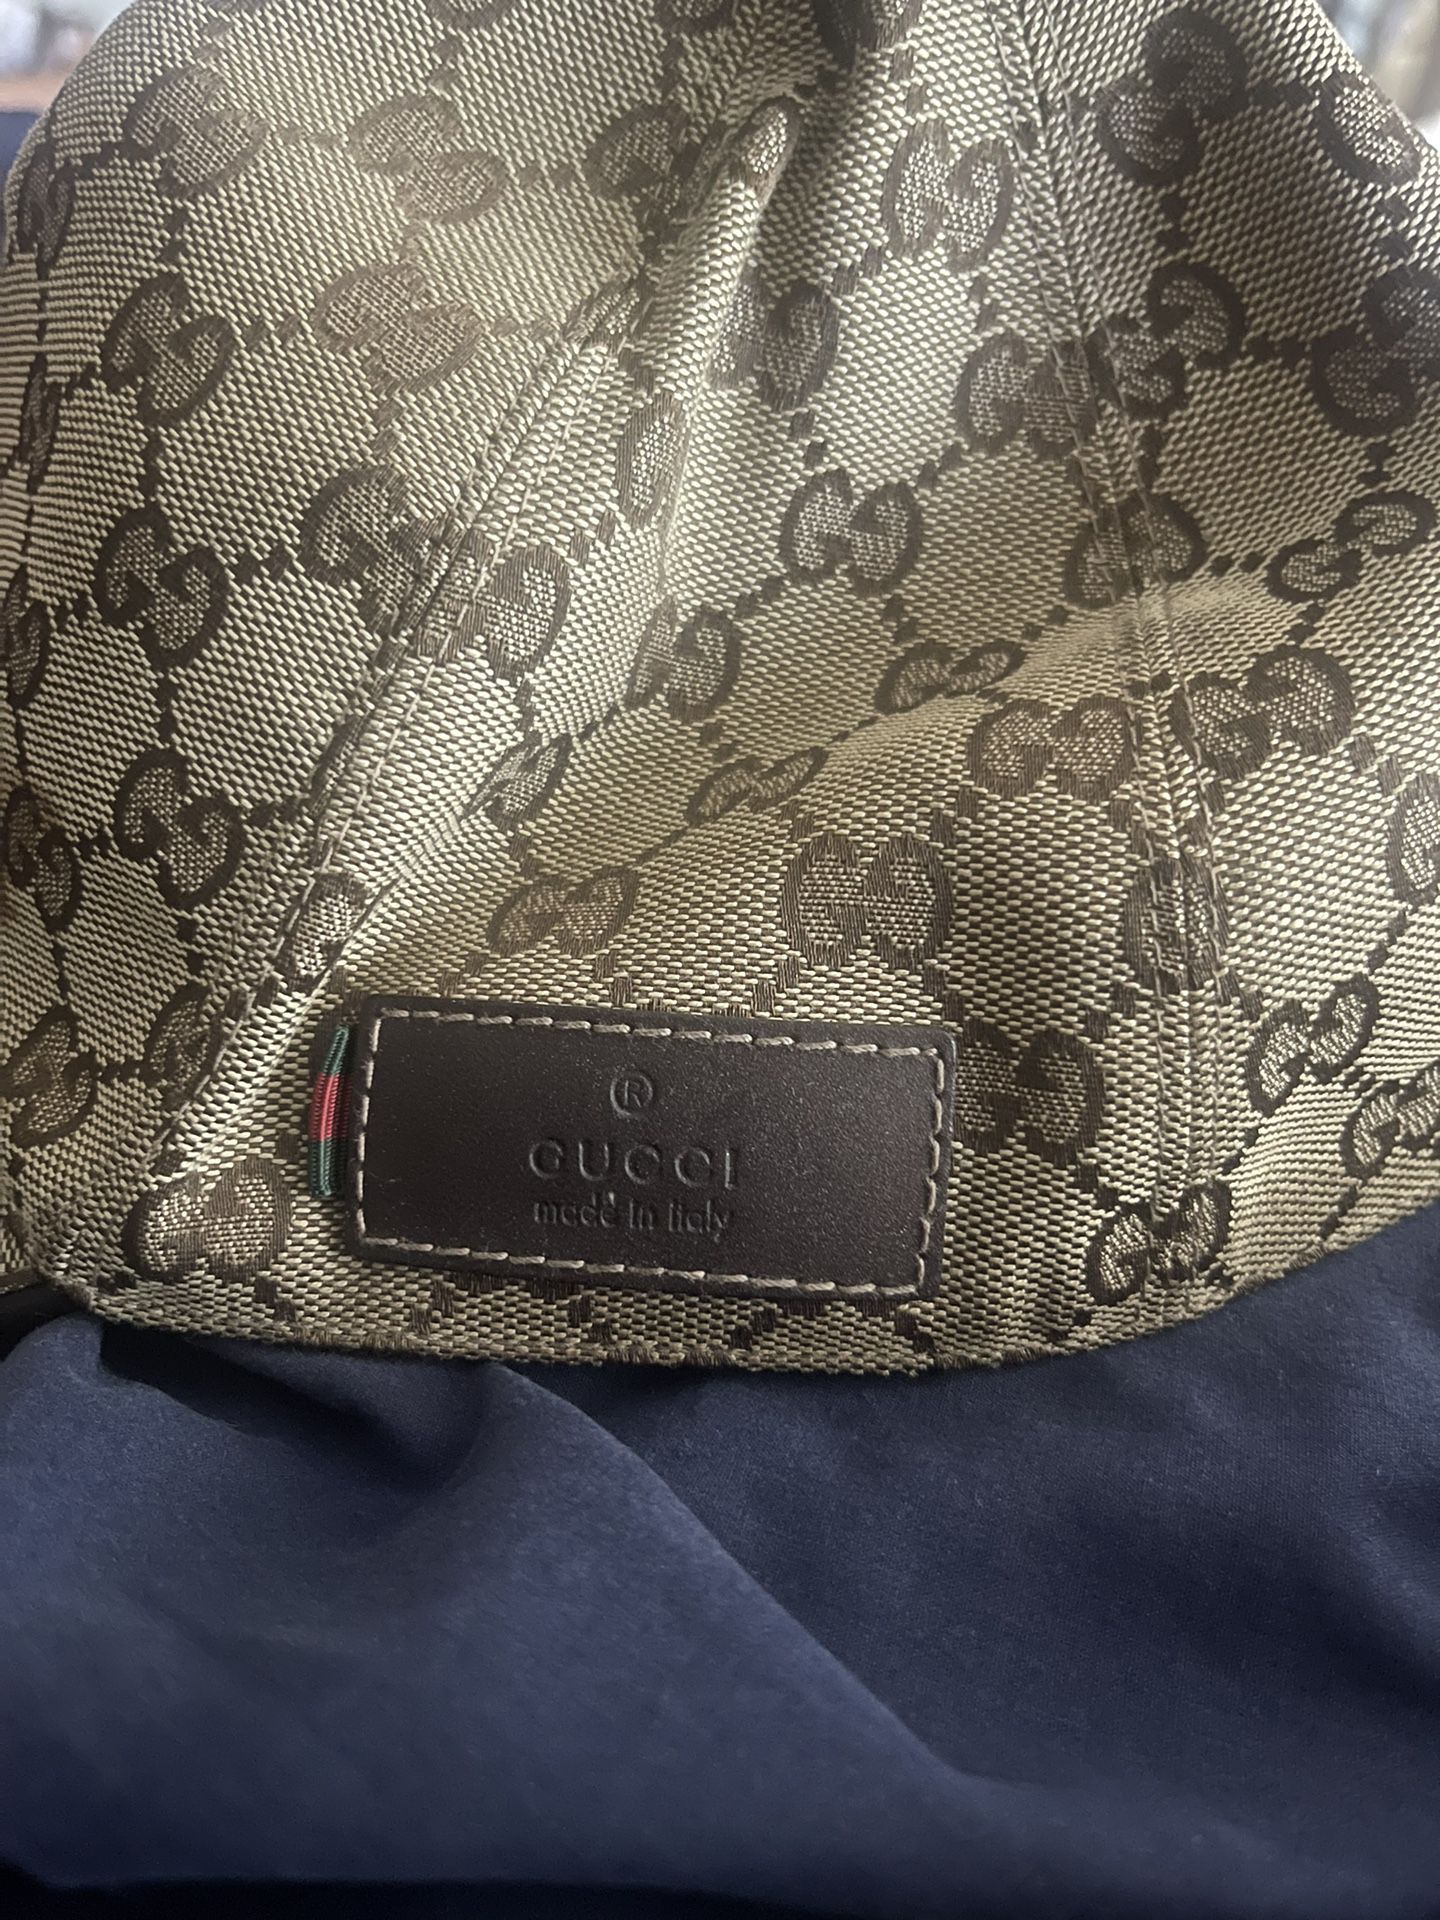 Original Gucci Hat 190$